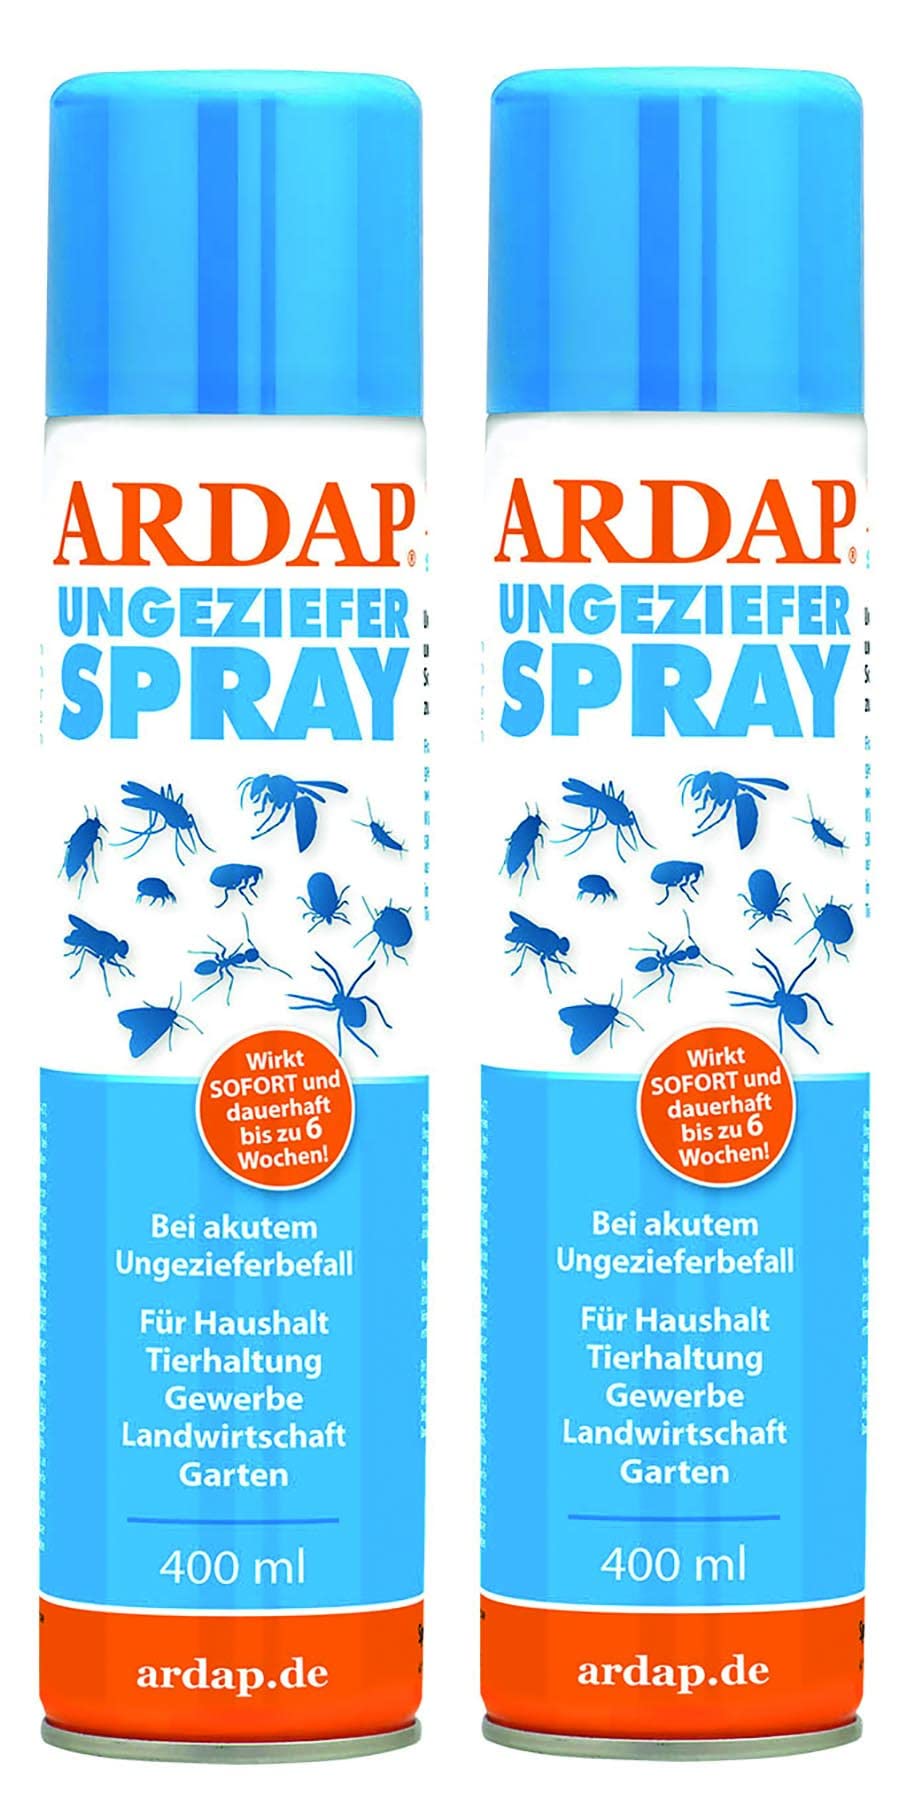 2 x 400ml Ardap bug spray Quiko active ingredient new - PawsPlanet Australia